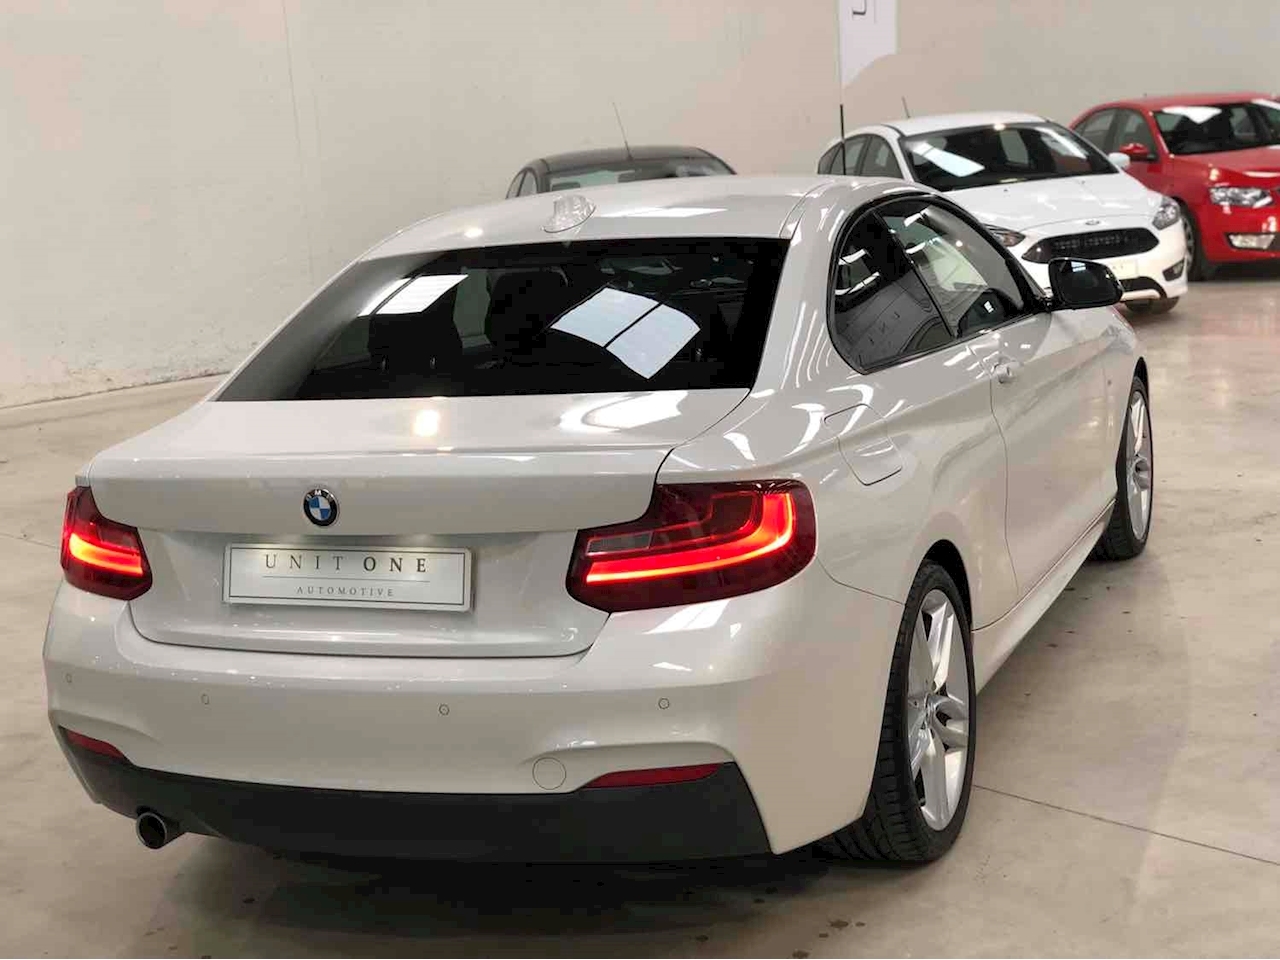 The new BMW 4 Series Gran Coupé (04/2017).